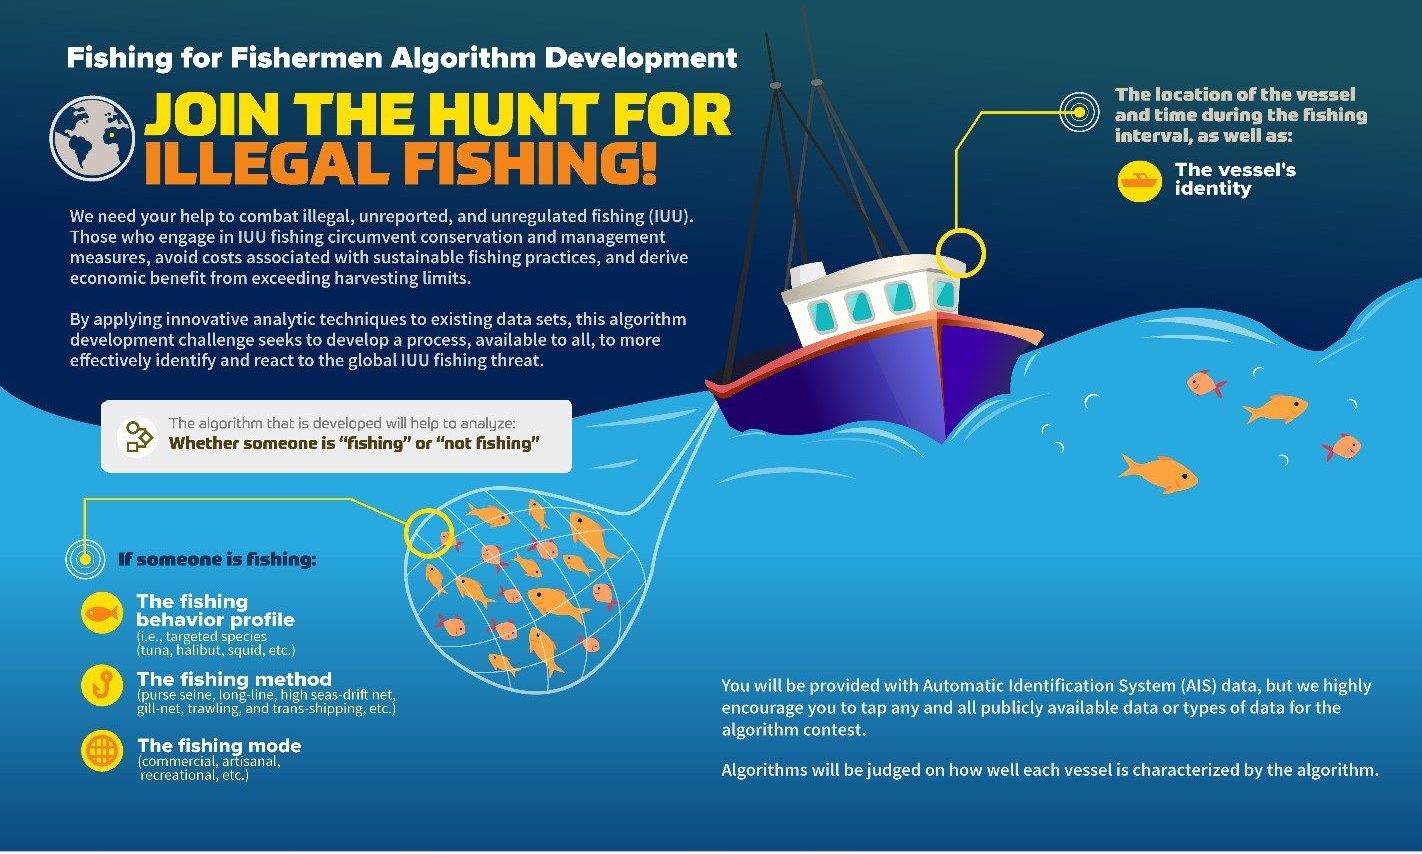 Fishing for Fishermen Maritime Data Challenge